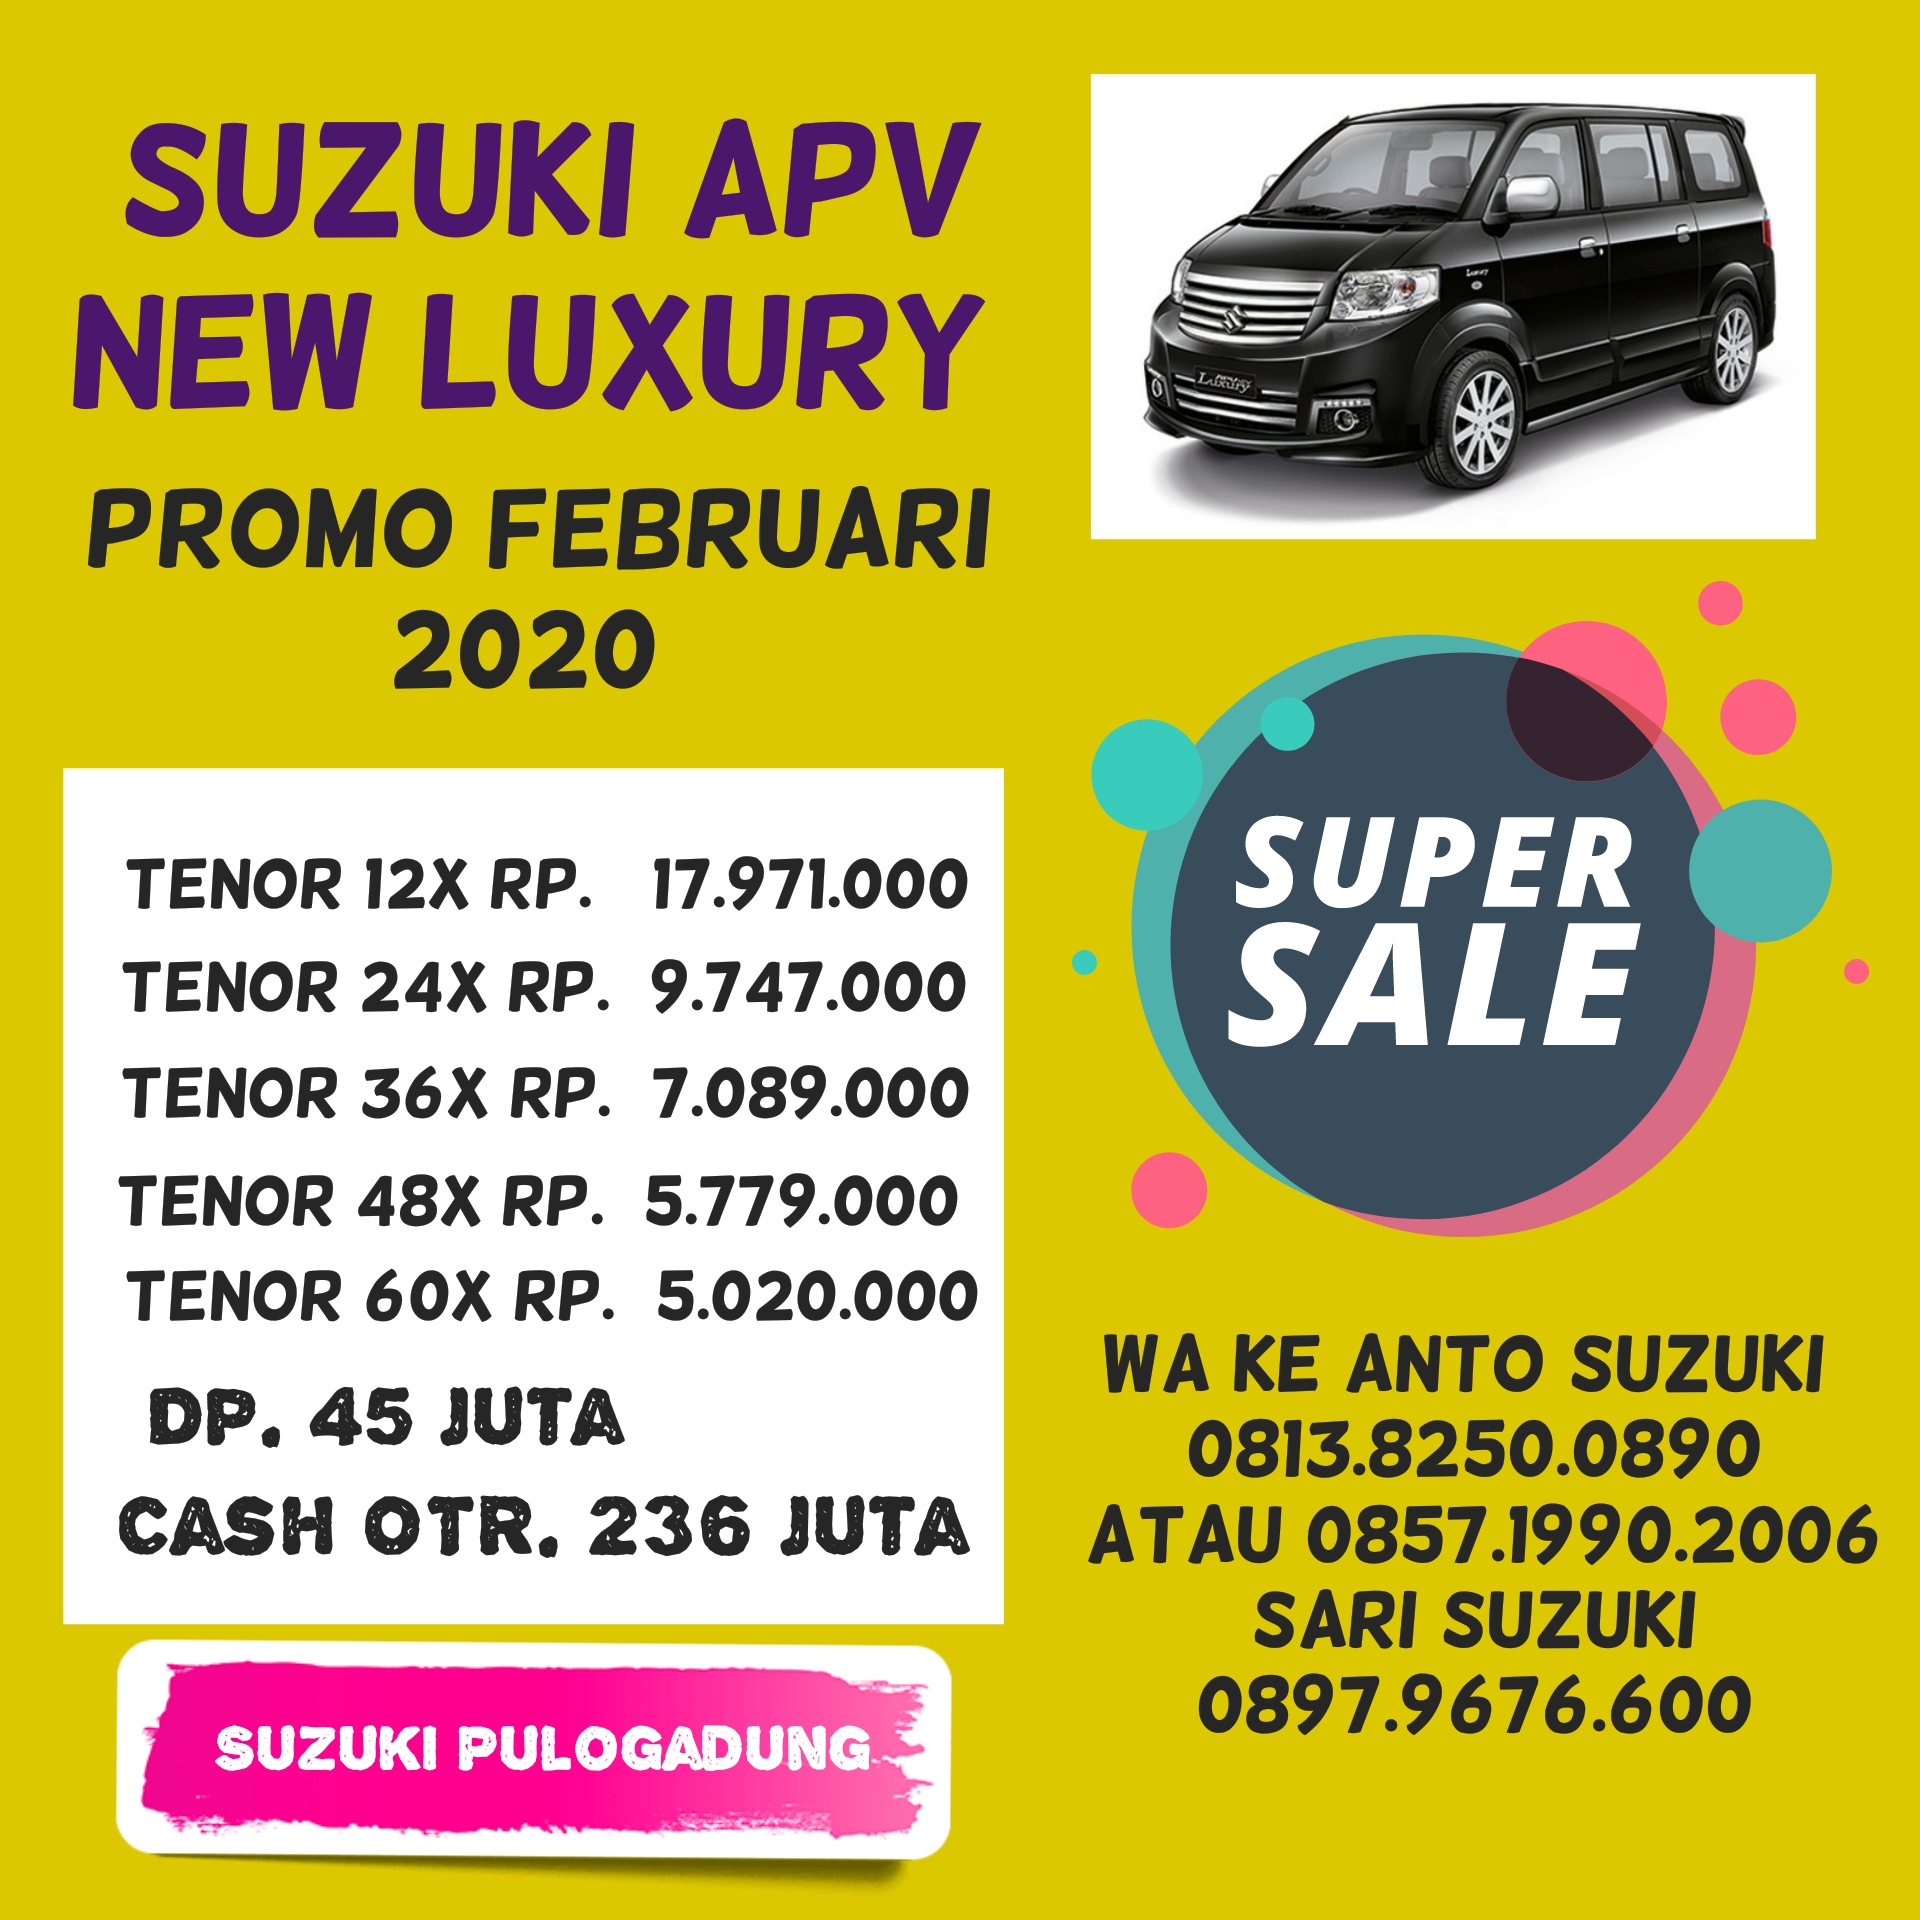 Paket Kredit Suzuki Apv New Luxury Februari Tahun 2020 Harga Suzuki Ertiga Dp 15 Juta Promo Suzuki Ertiga Paket Kredit Suzuki Ertiga Terbaru 2021 Promo Suzuki Xl7